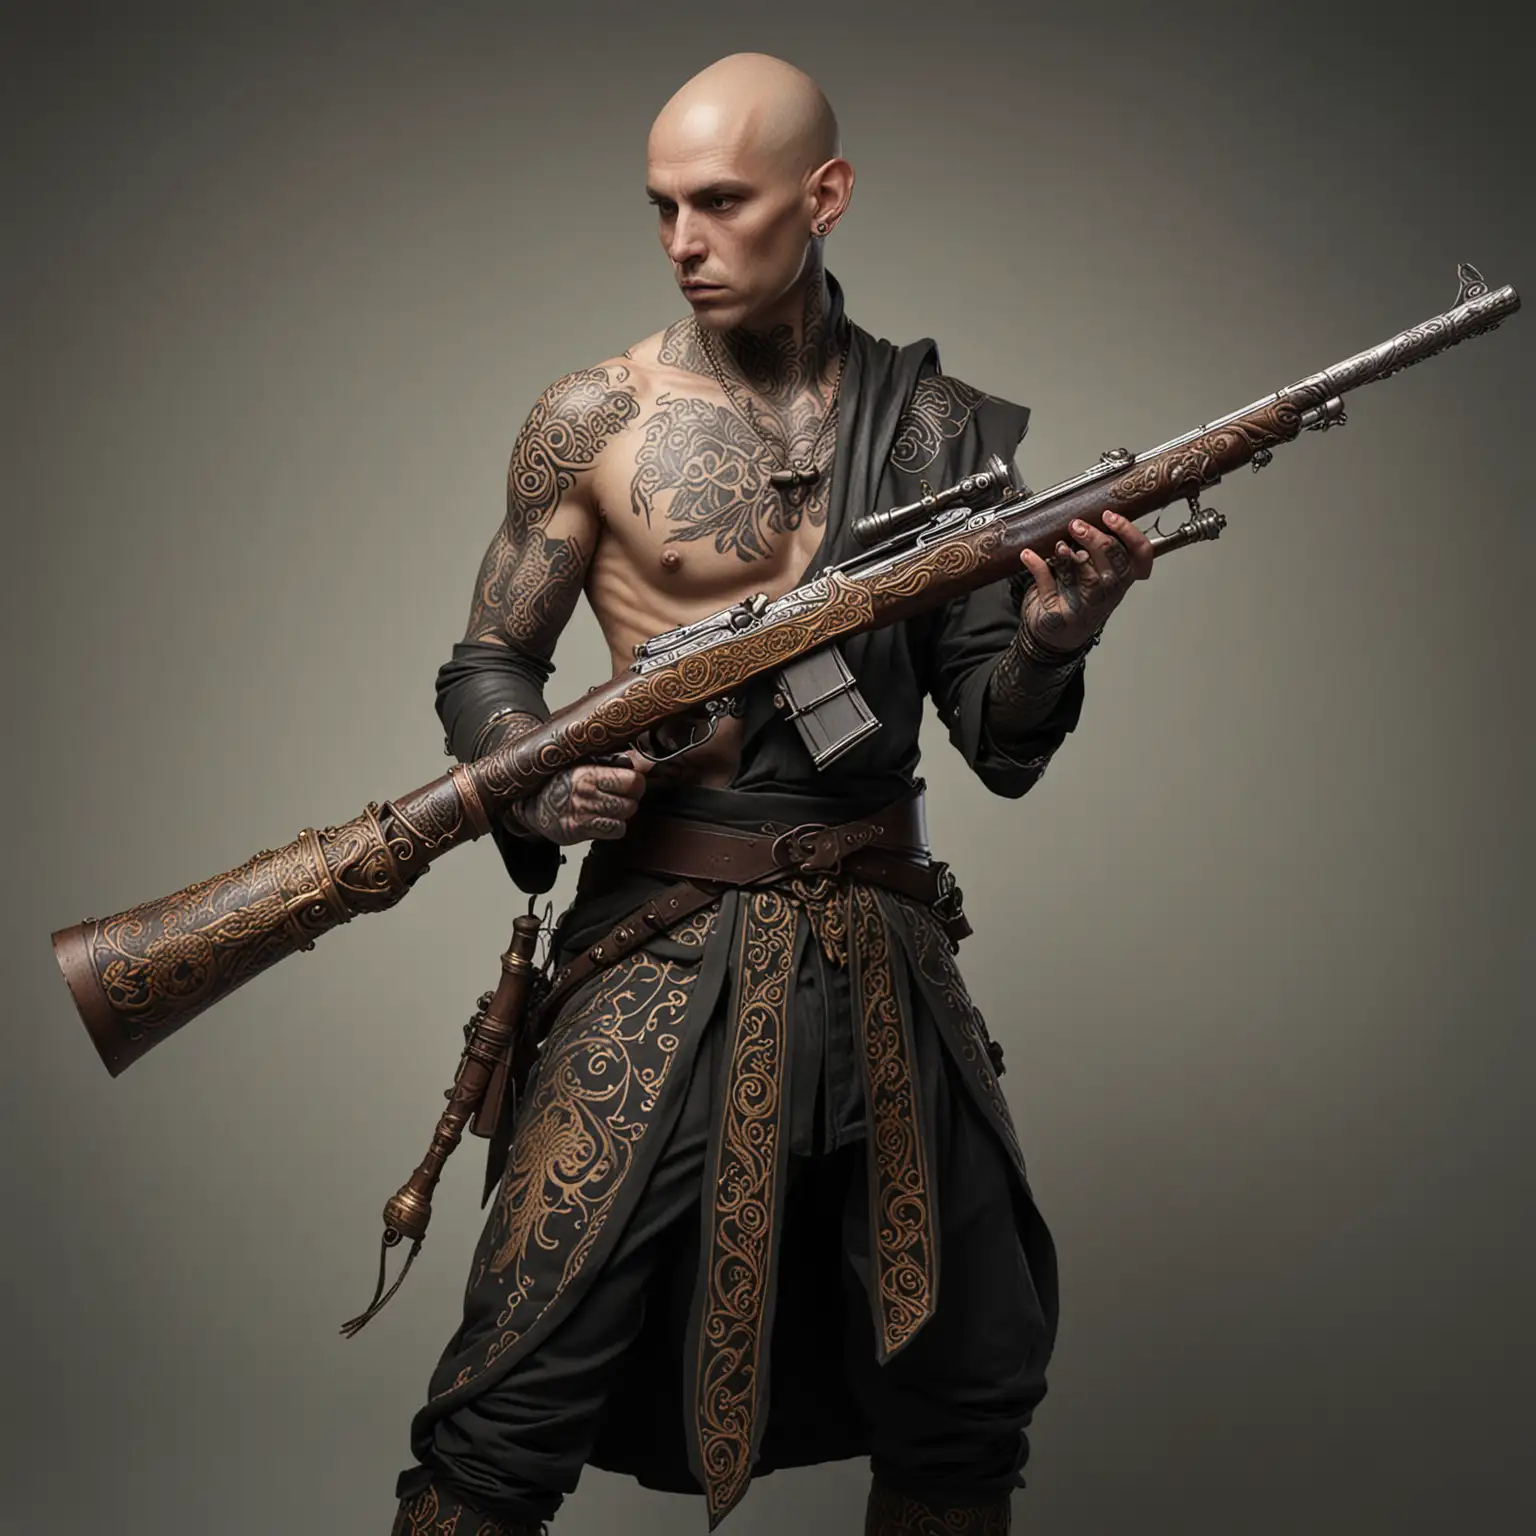 Bald,  tattooed half-elf shadow monk wielding an ornate antique hunting rifle